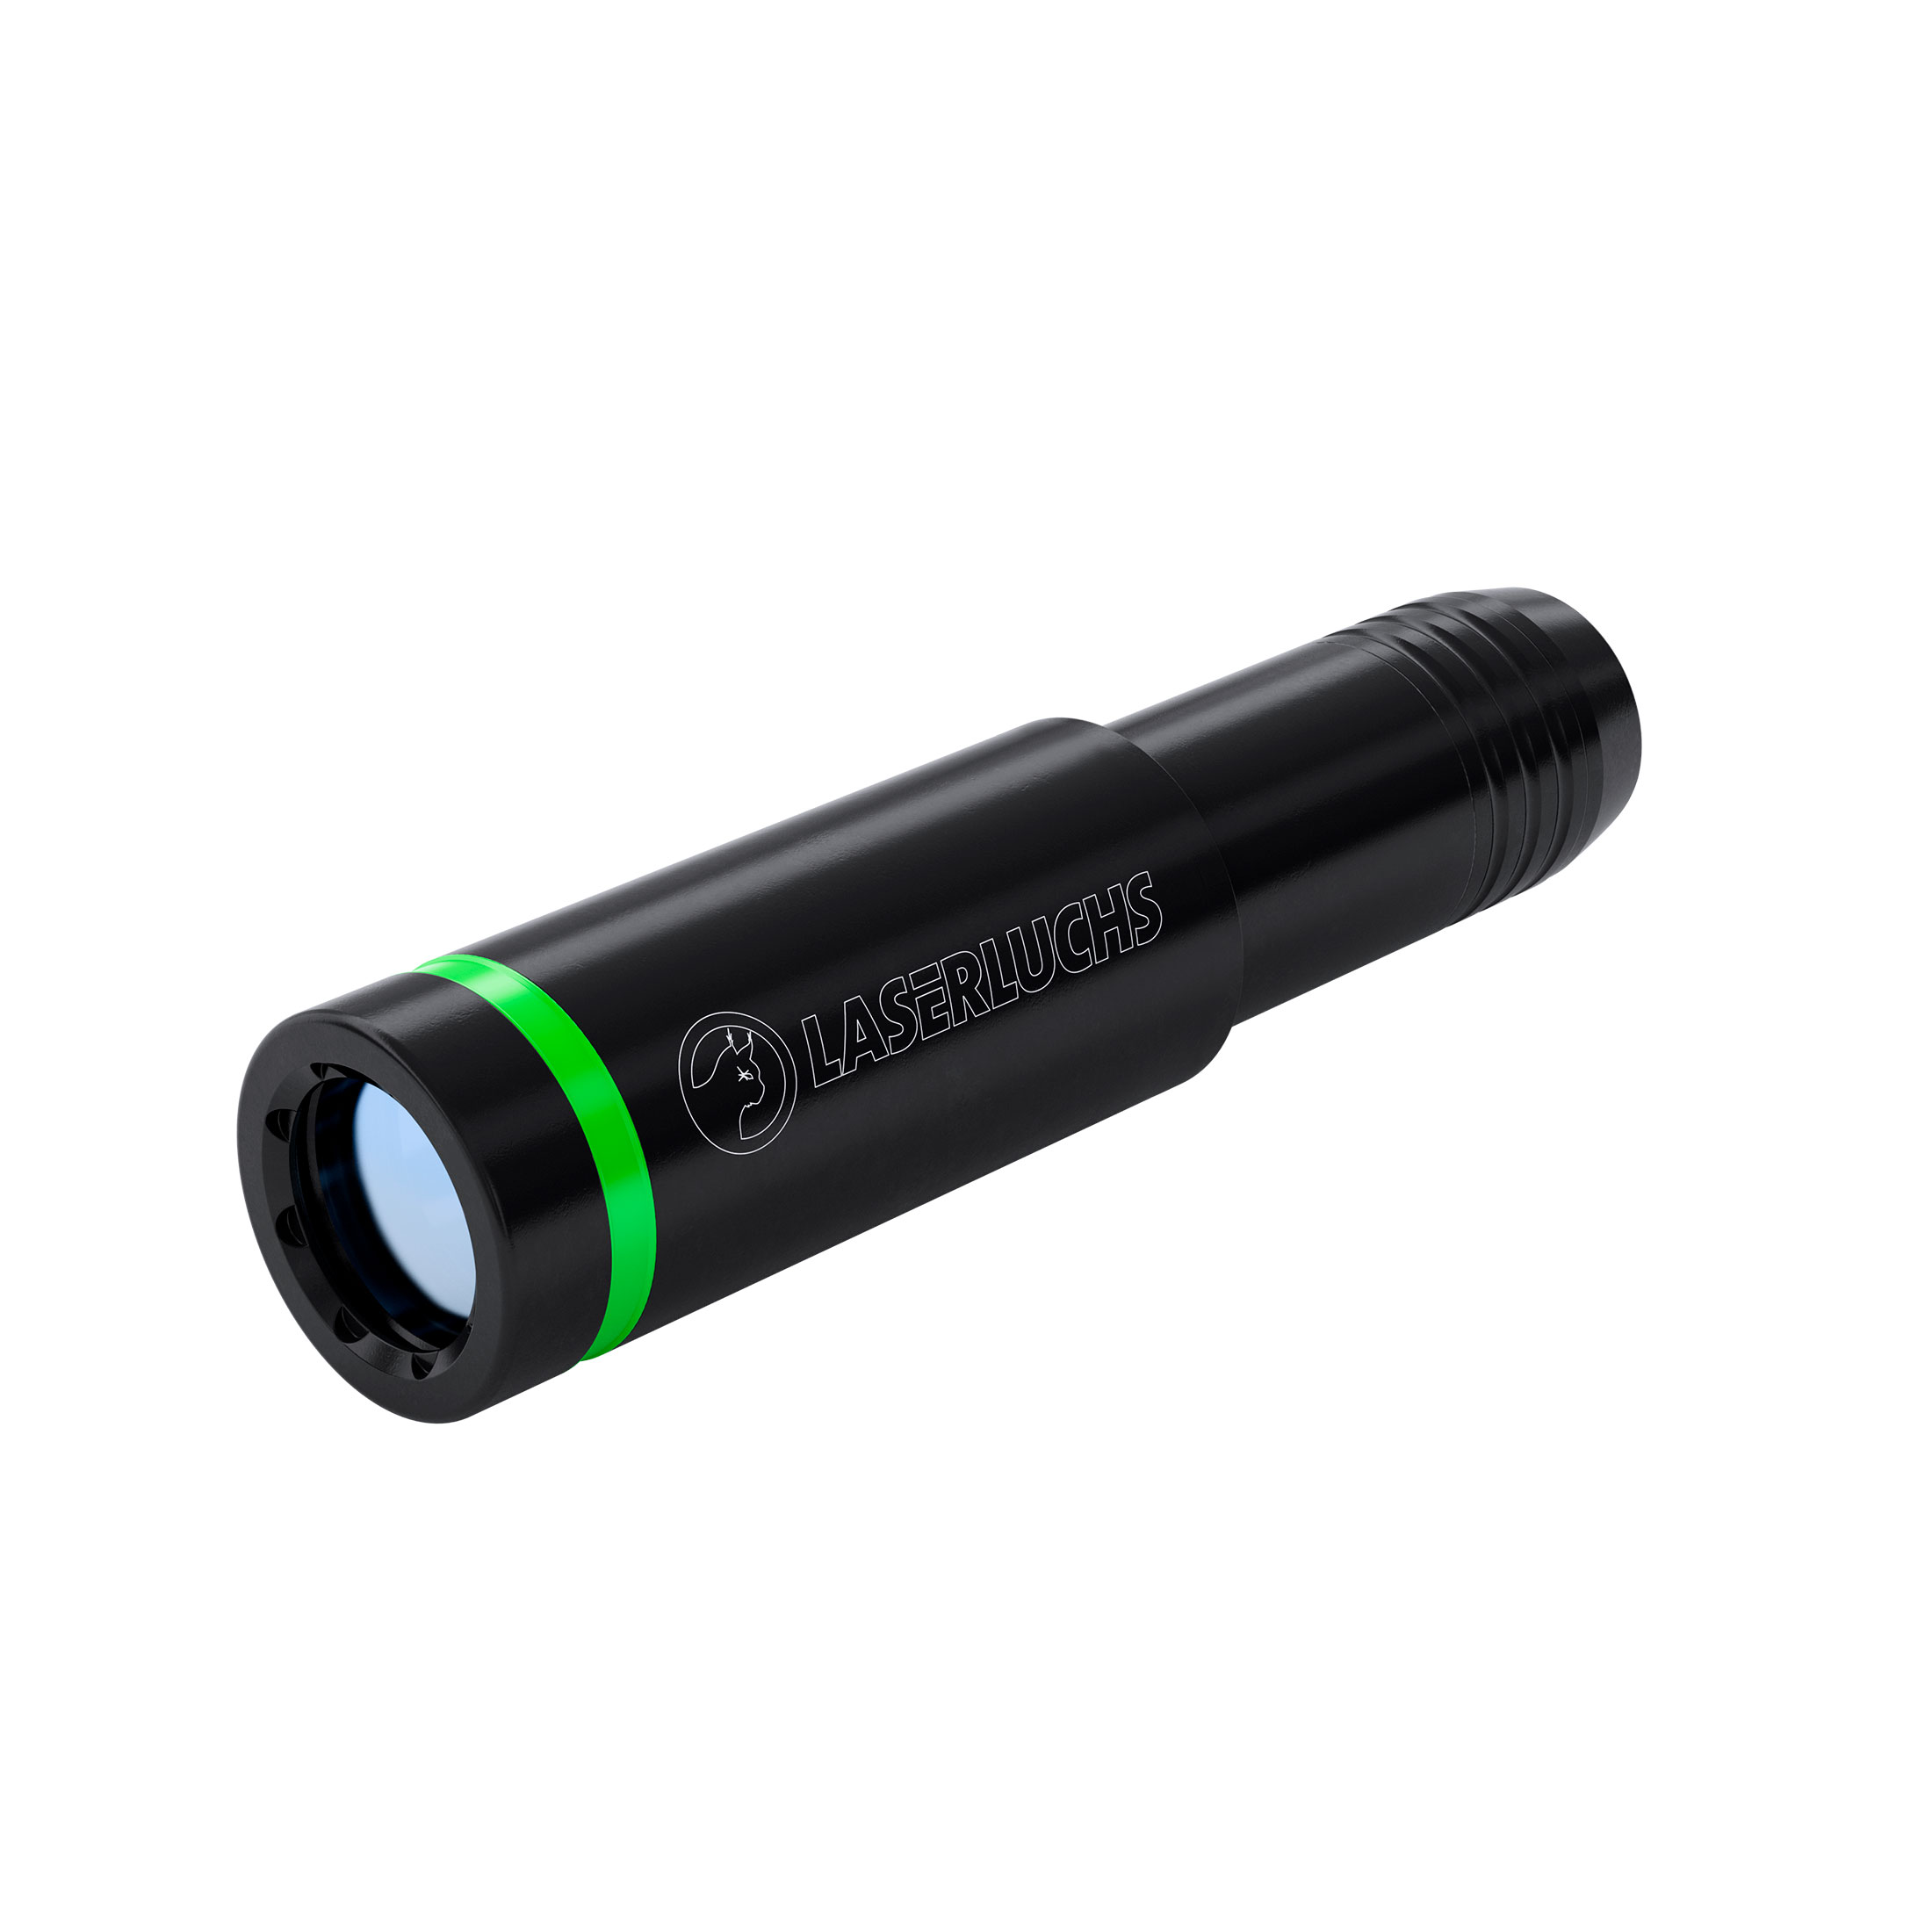 Expander Laser, infrarot, 850 nm, 7,2 °, 50 mW, Ø30x130 mm, Laser Klasse 1, Fokus fixiert